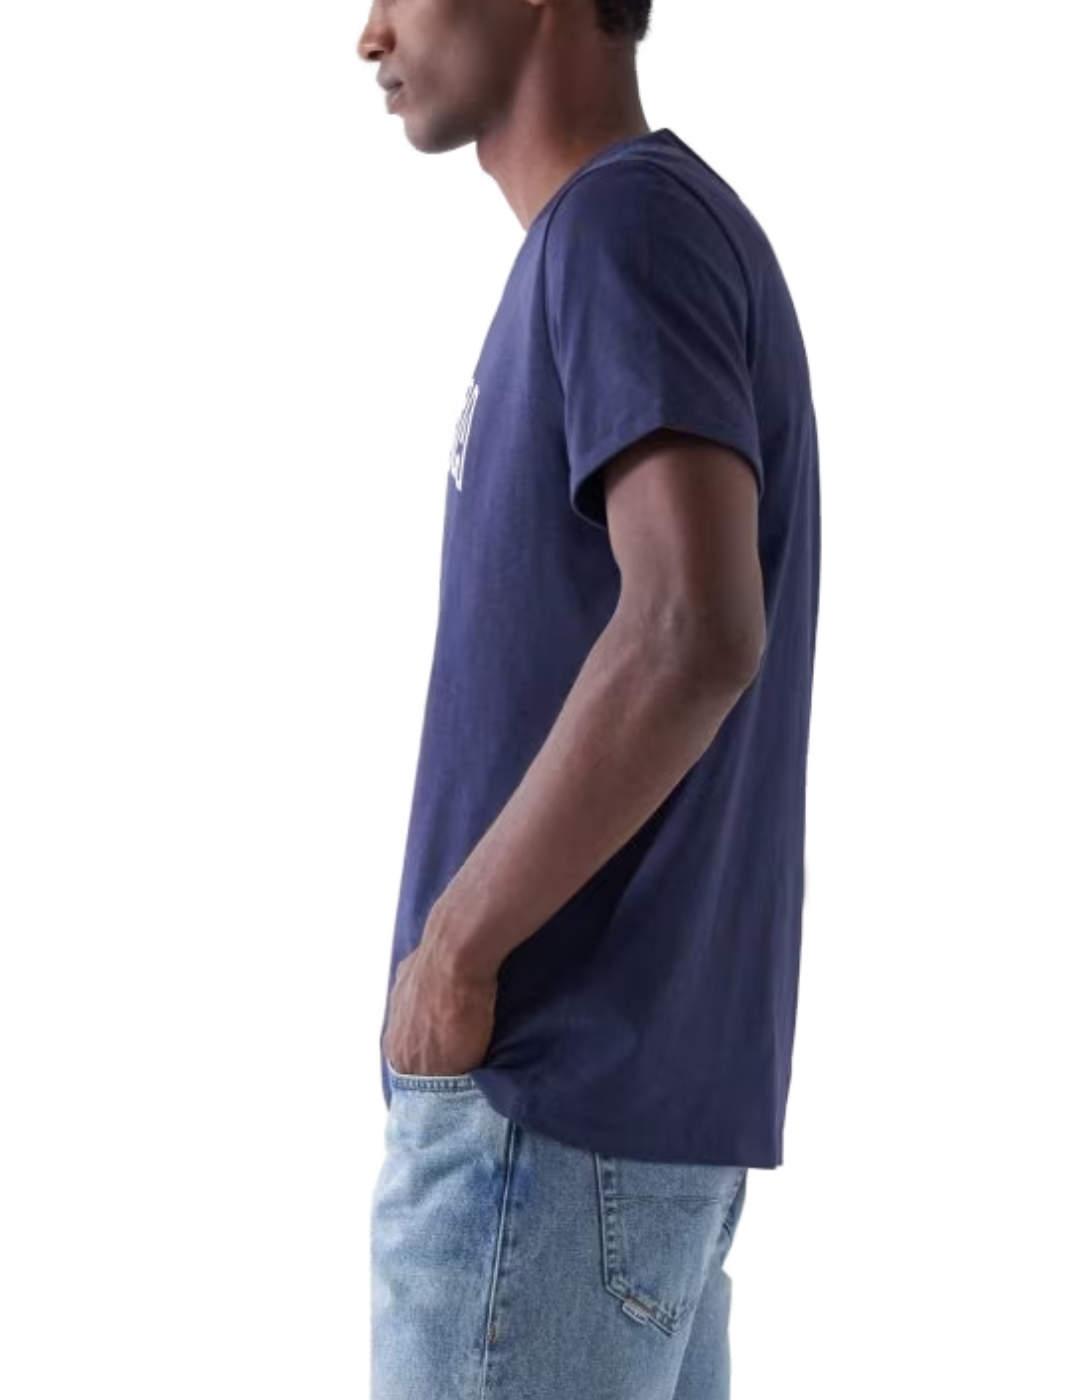 Camiseta Salsa azul marino logo manga corta de hombre